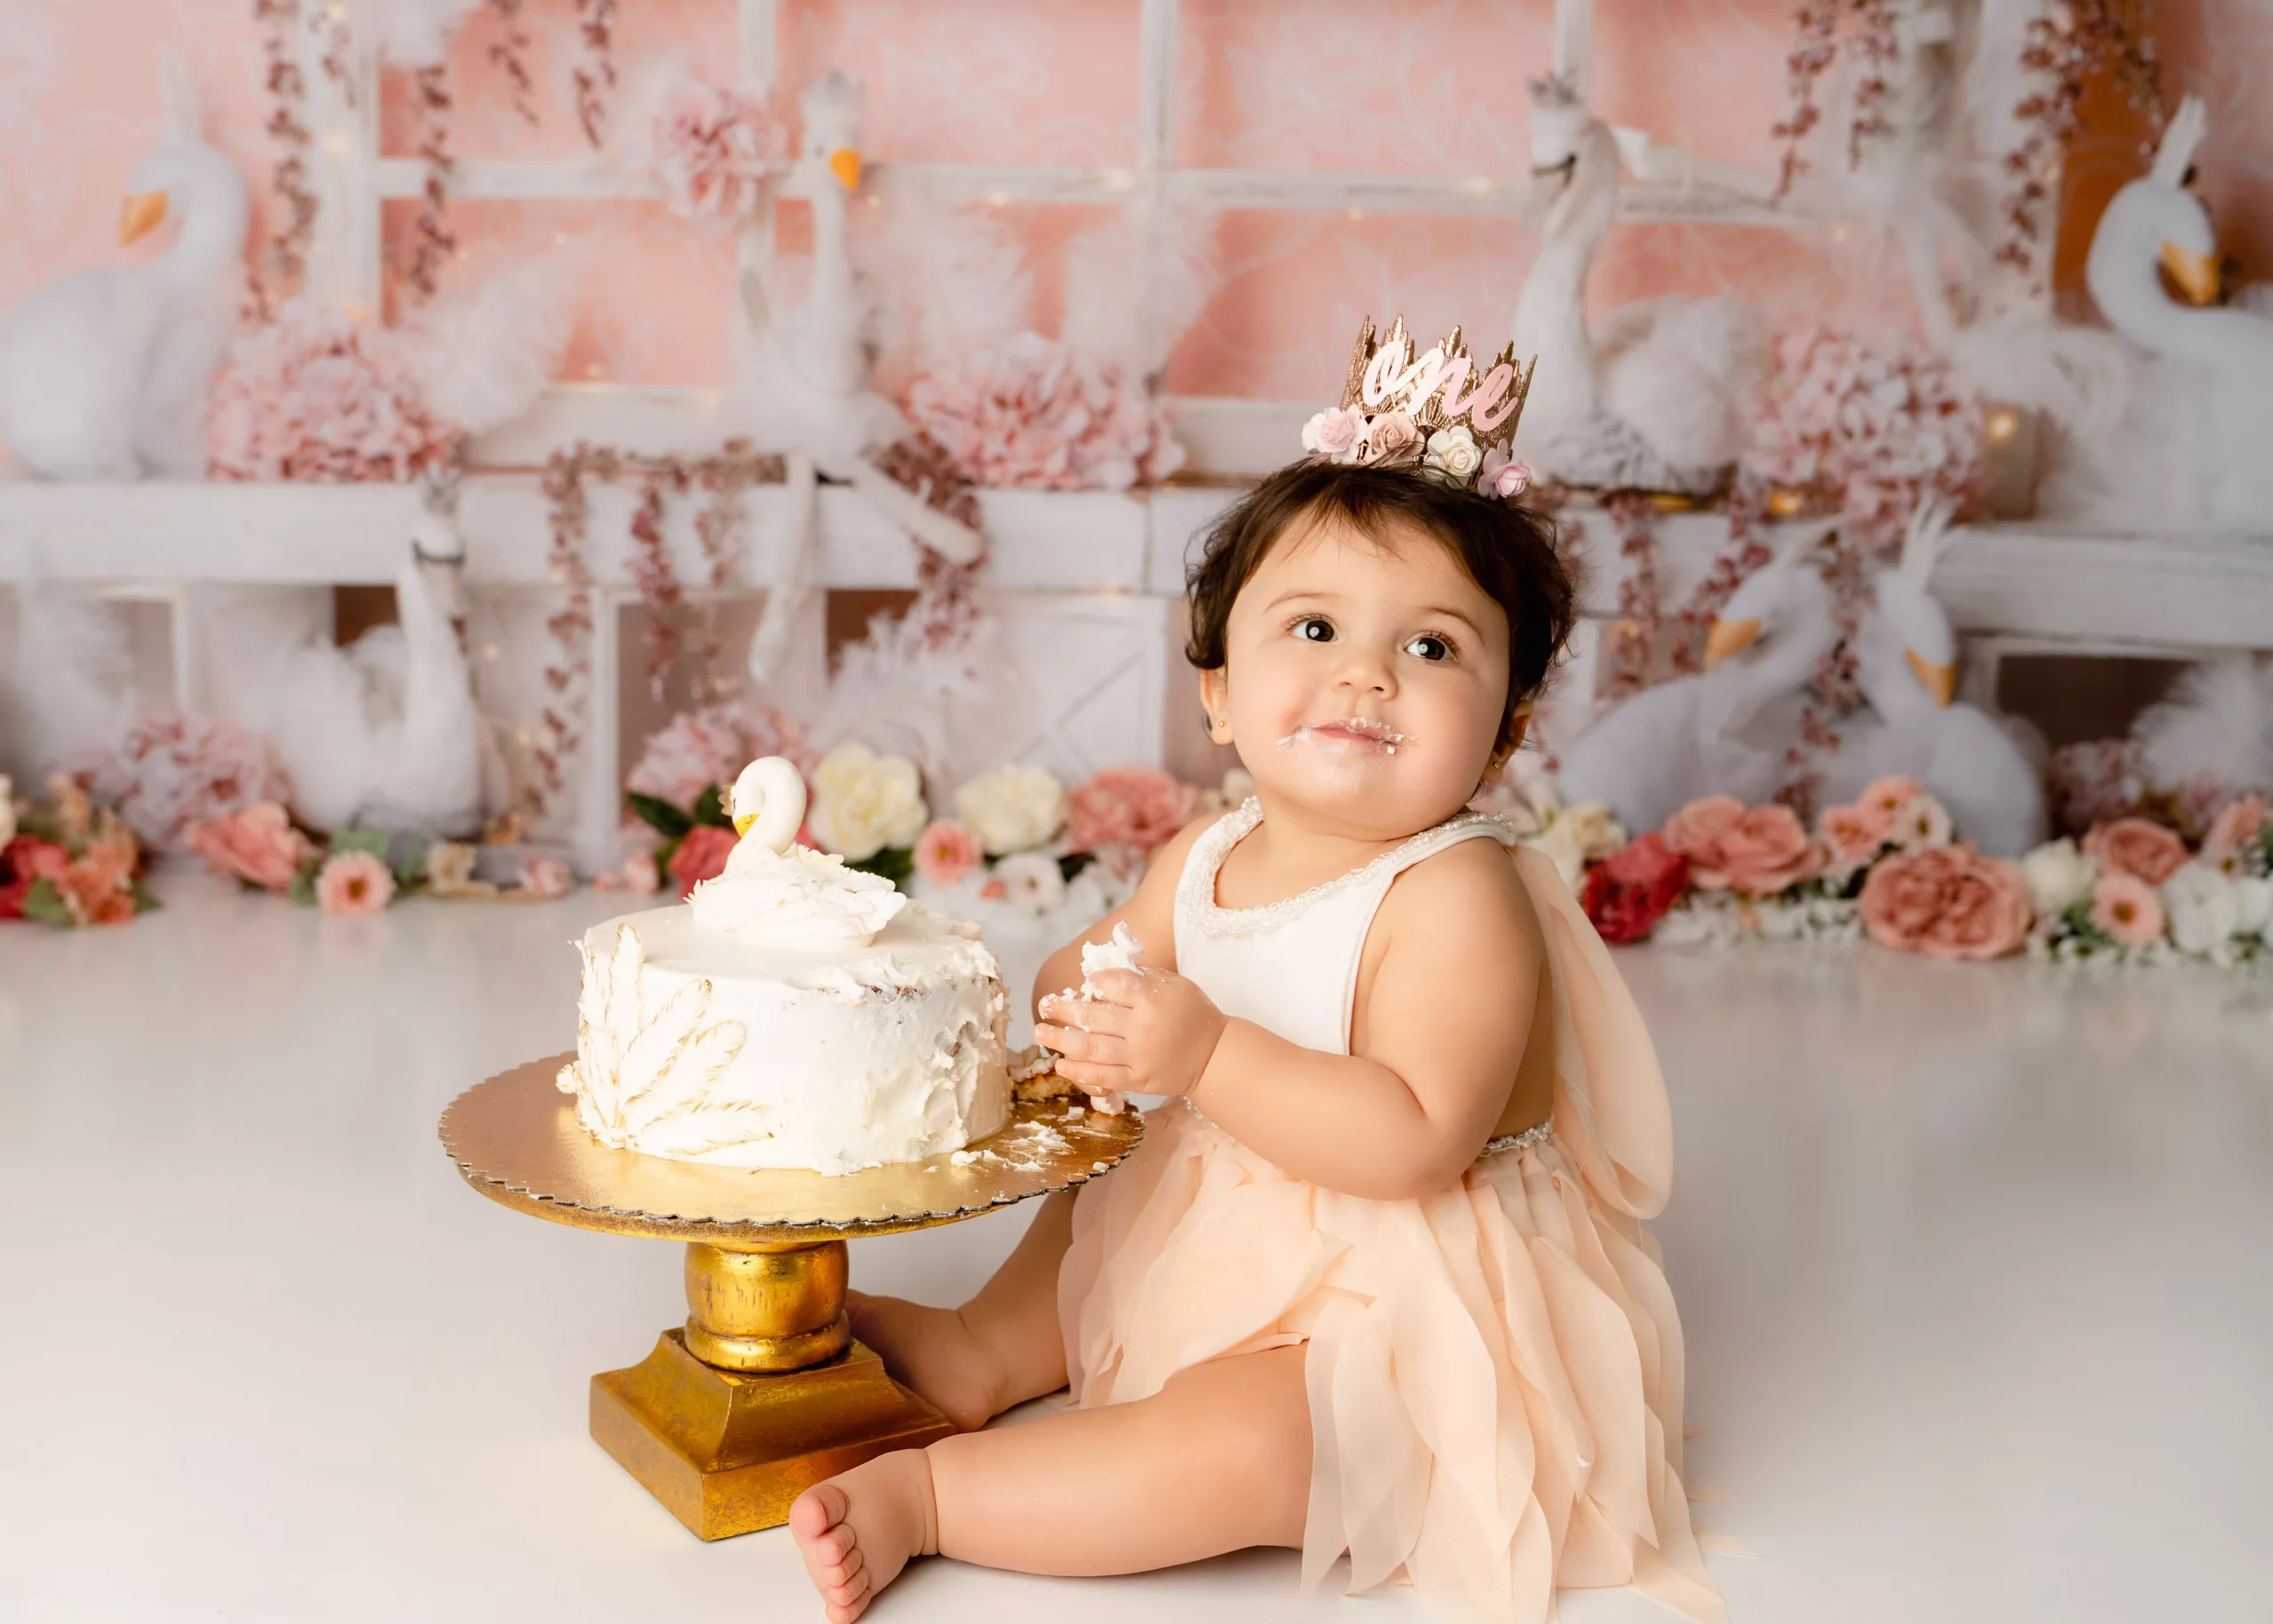 Orlando Girl Cake Smash 1st Birthday Photographer Photo Studio swan princess flowers crown cream pink white